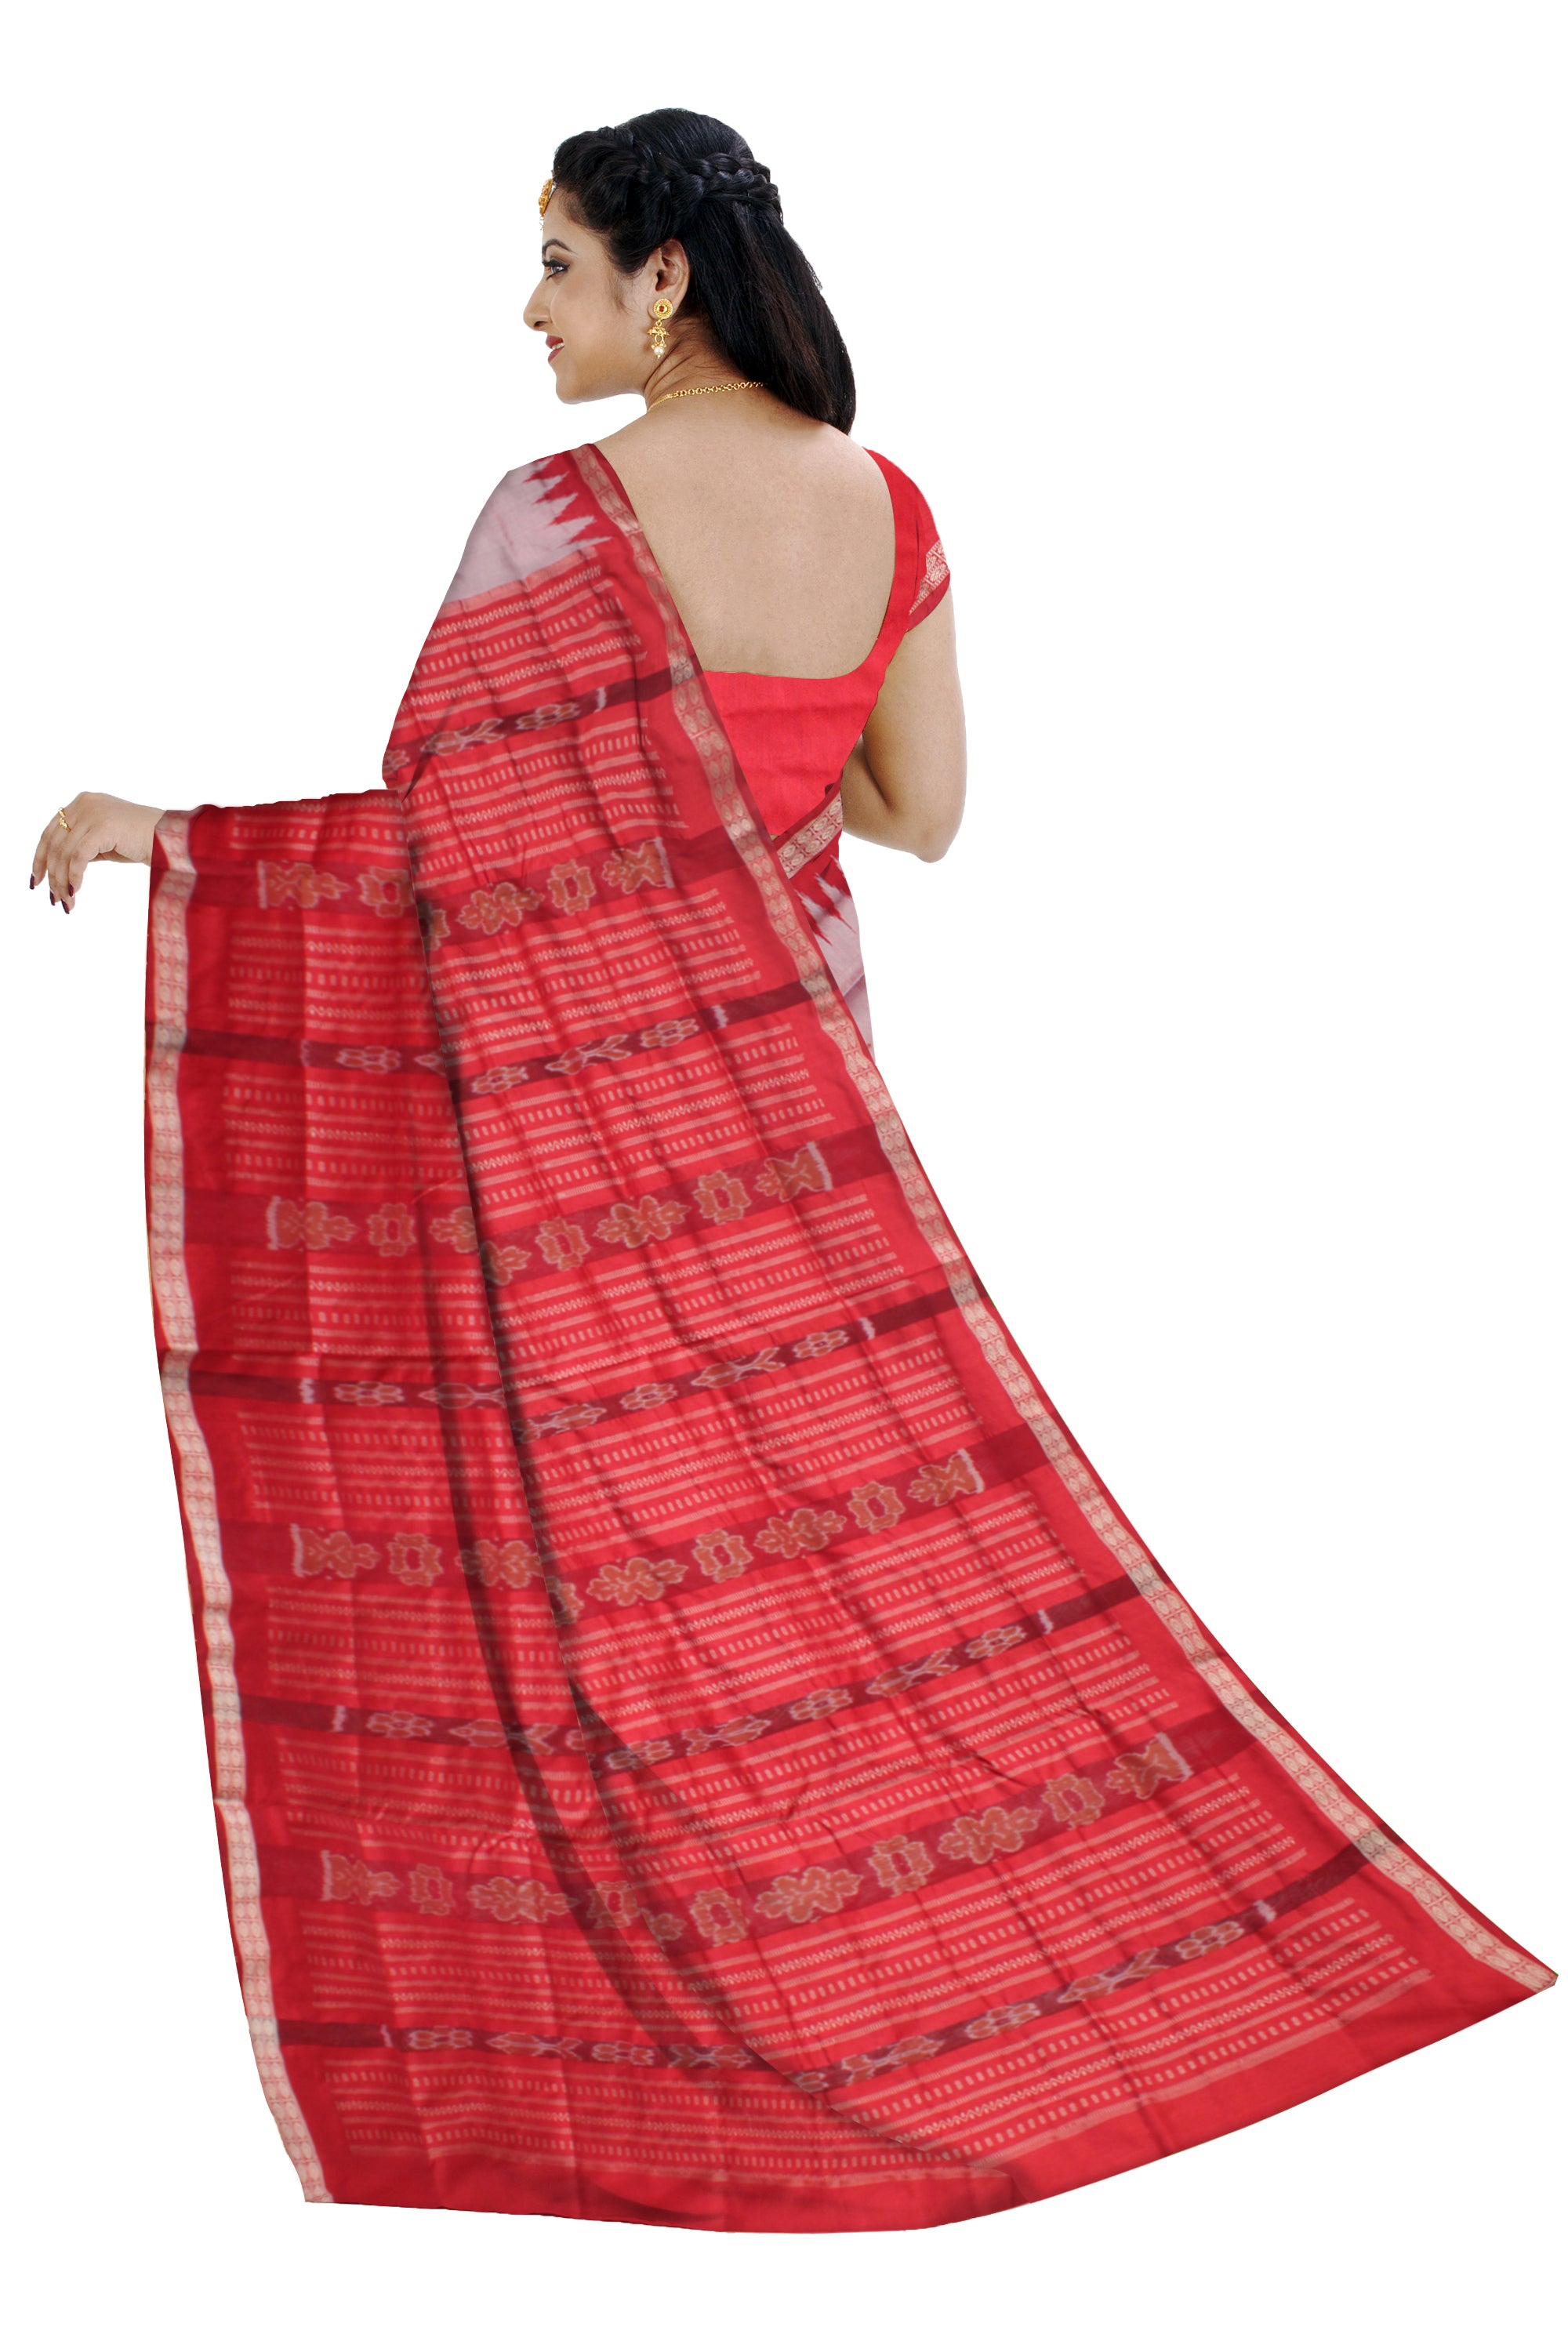 Bollywood Saree Online | Buy Red Bollywood Saree